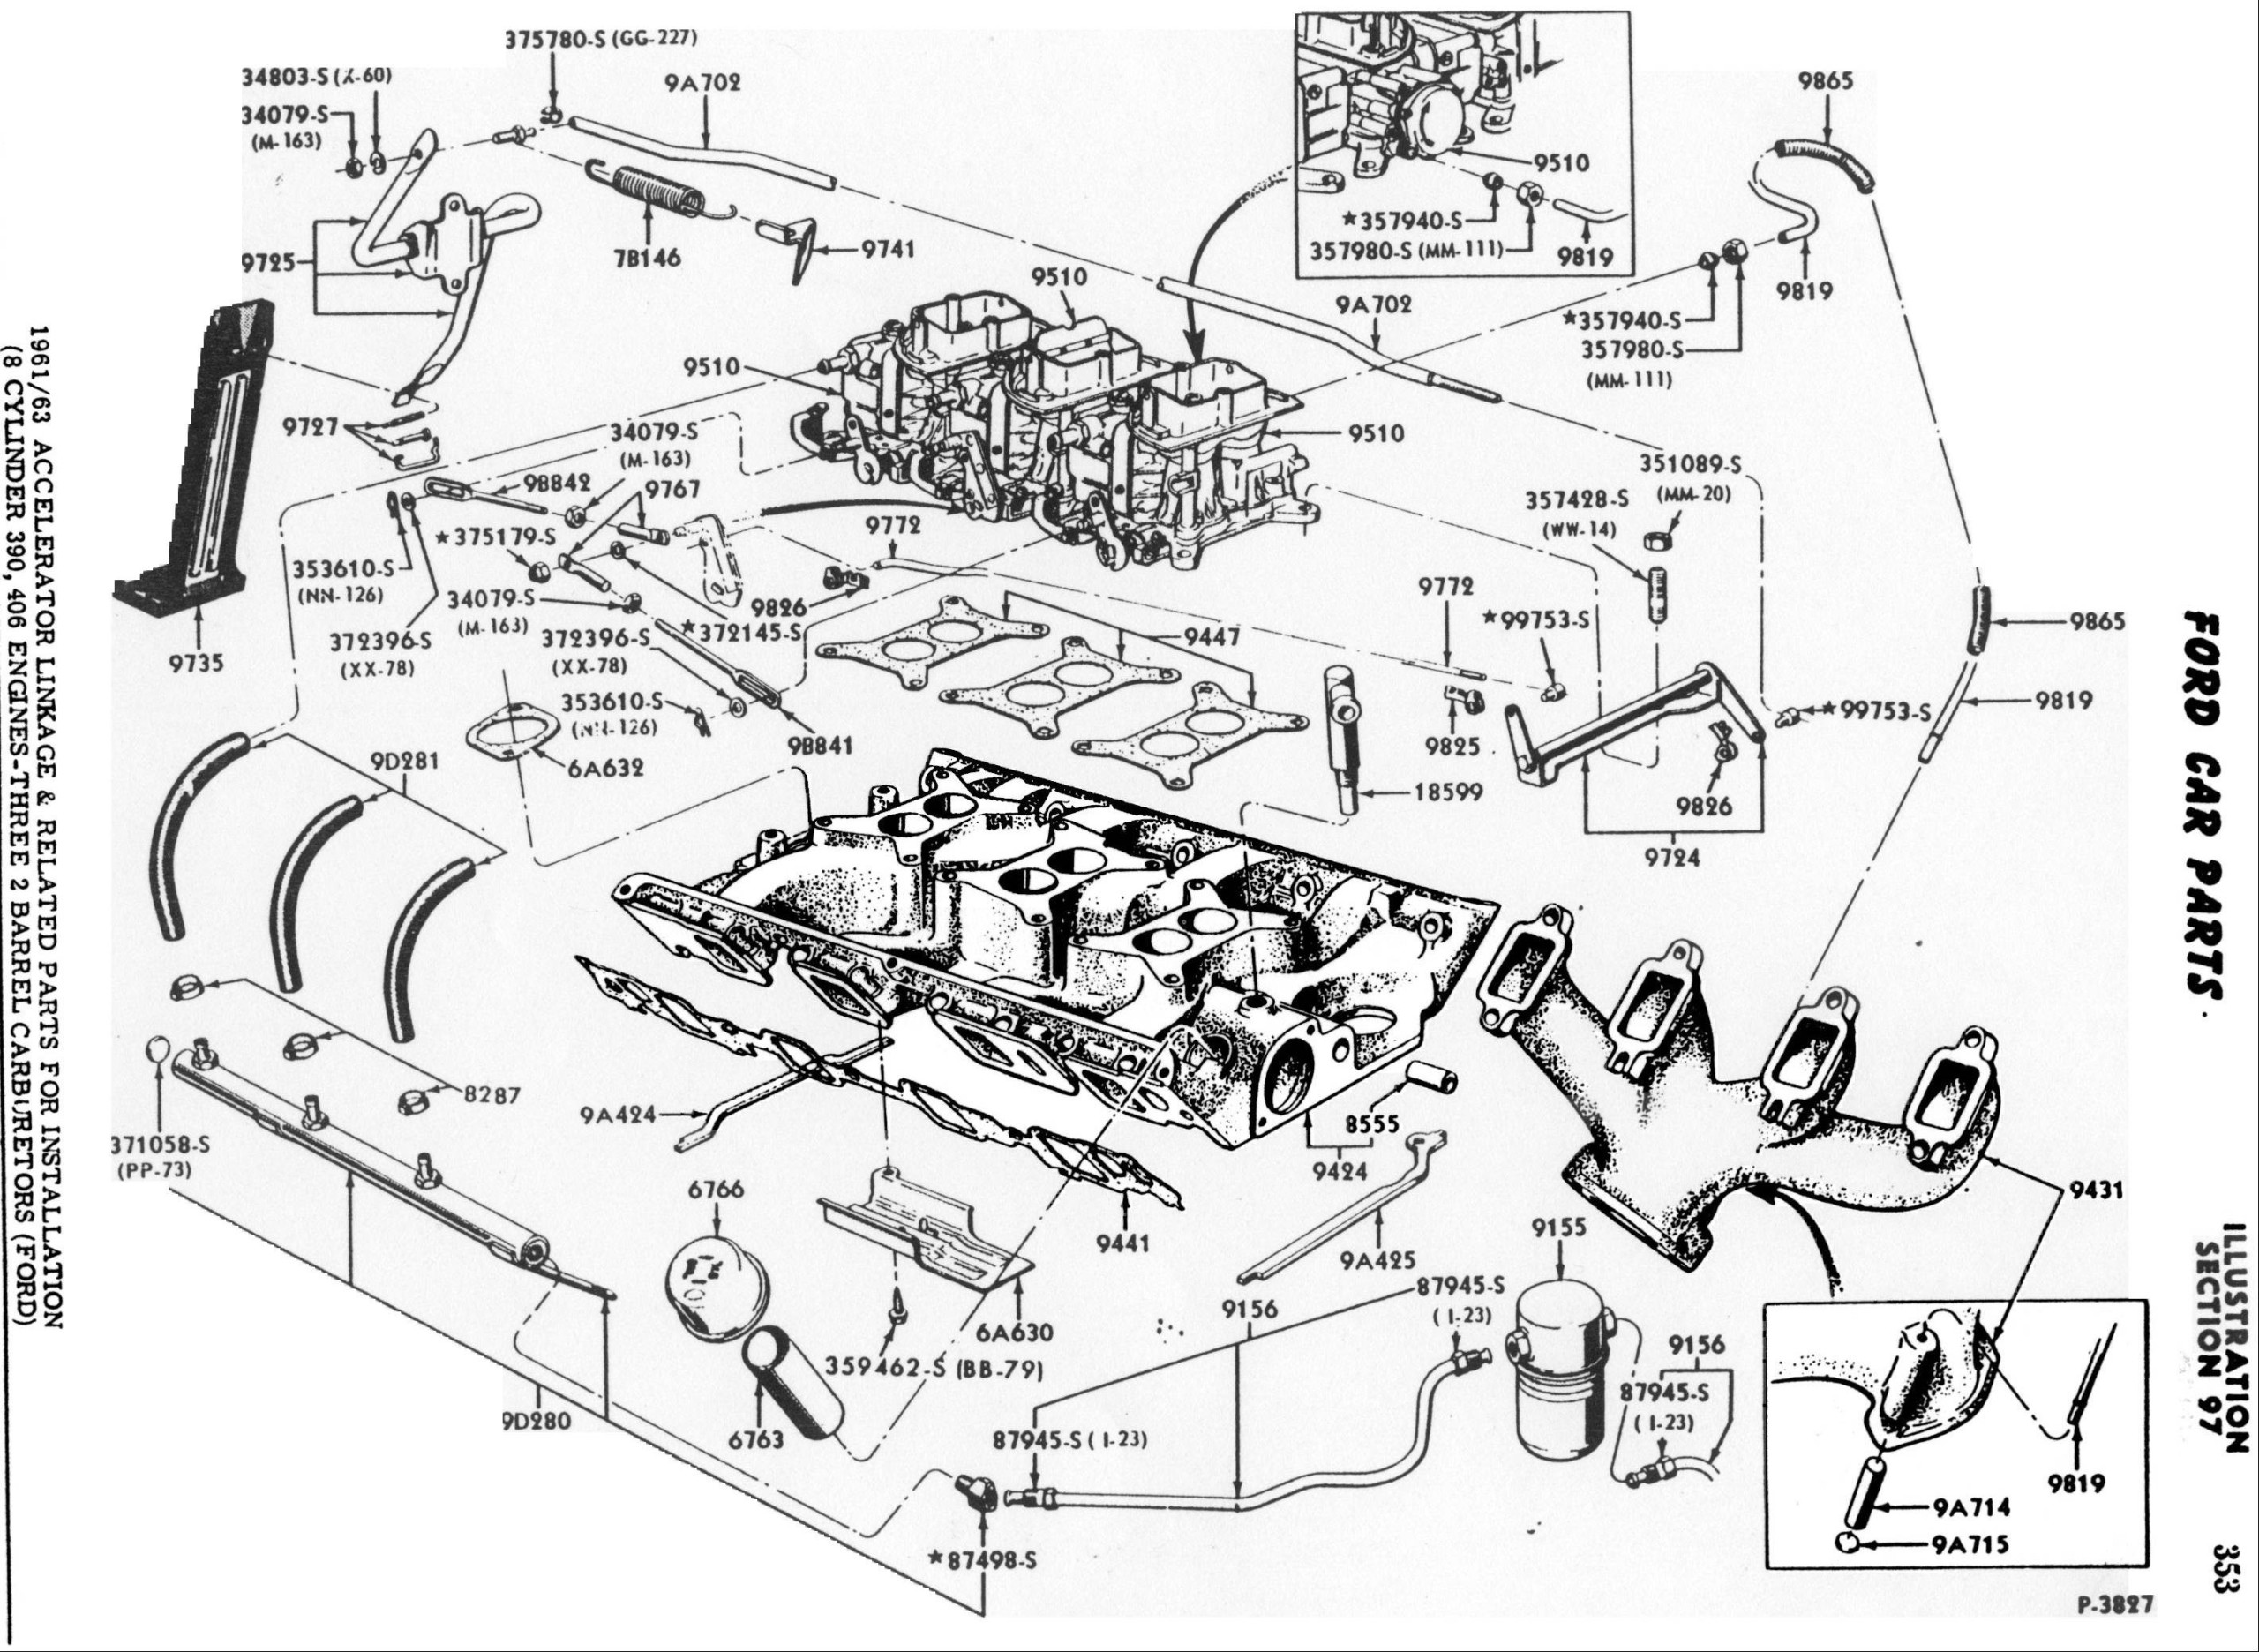 Diagram] 1997 Ford 460 Engine Diagram Full Version Hd